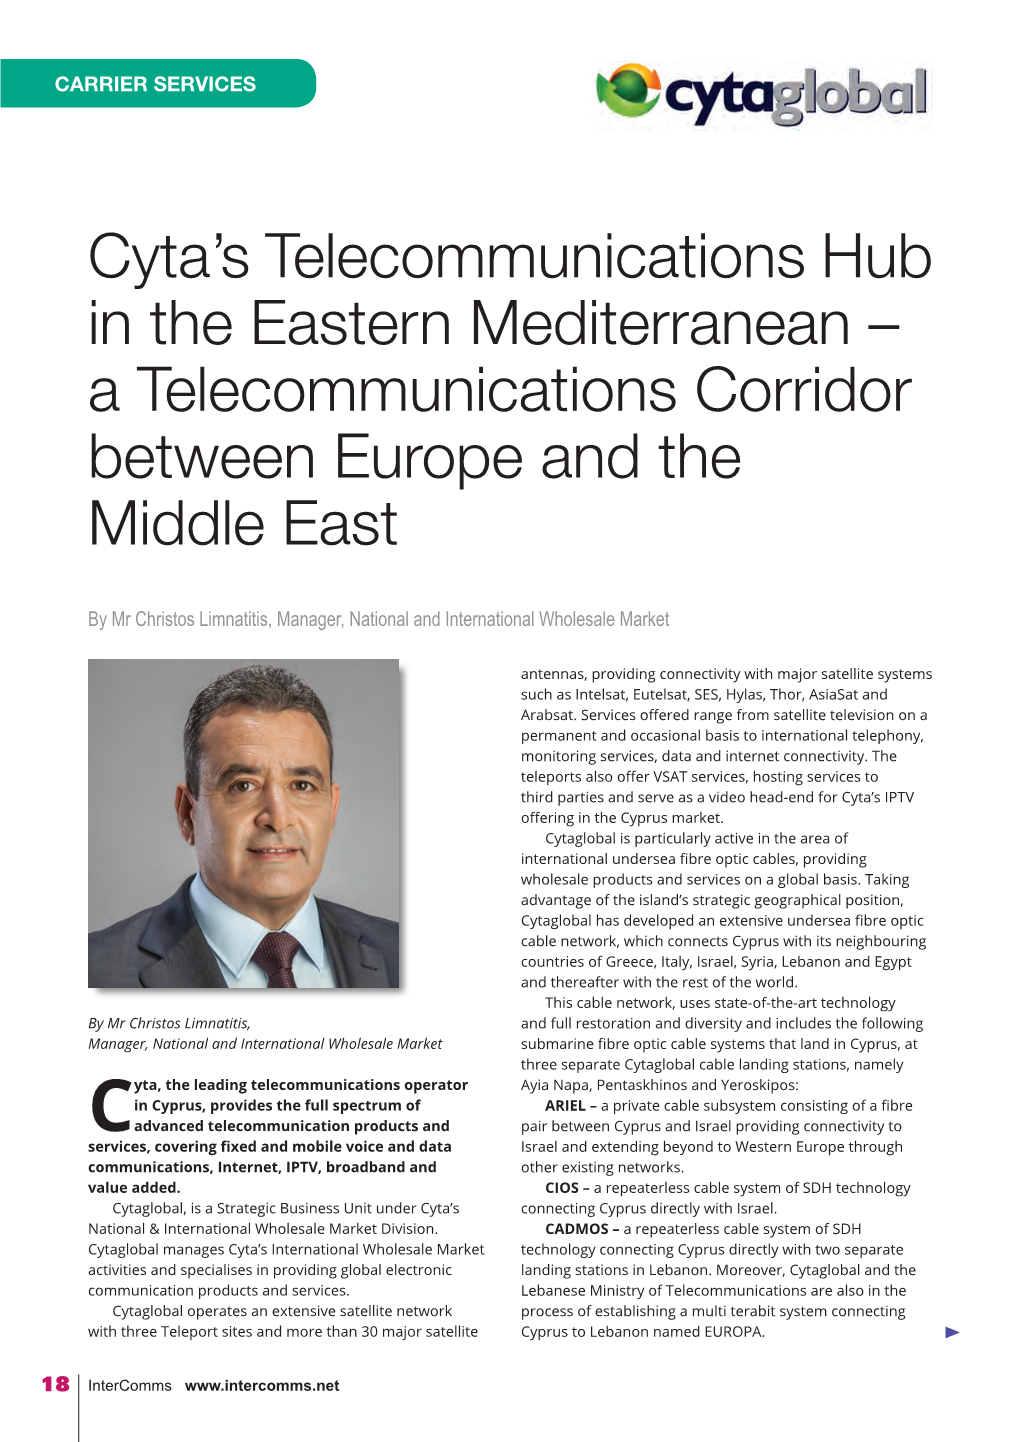 Cyta's Telecommunications Hub in the Eastern Mediterranean